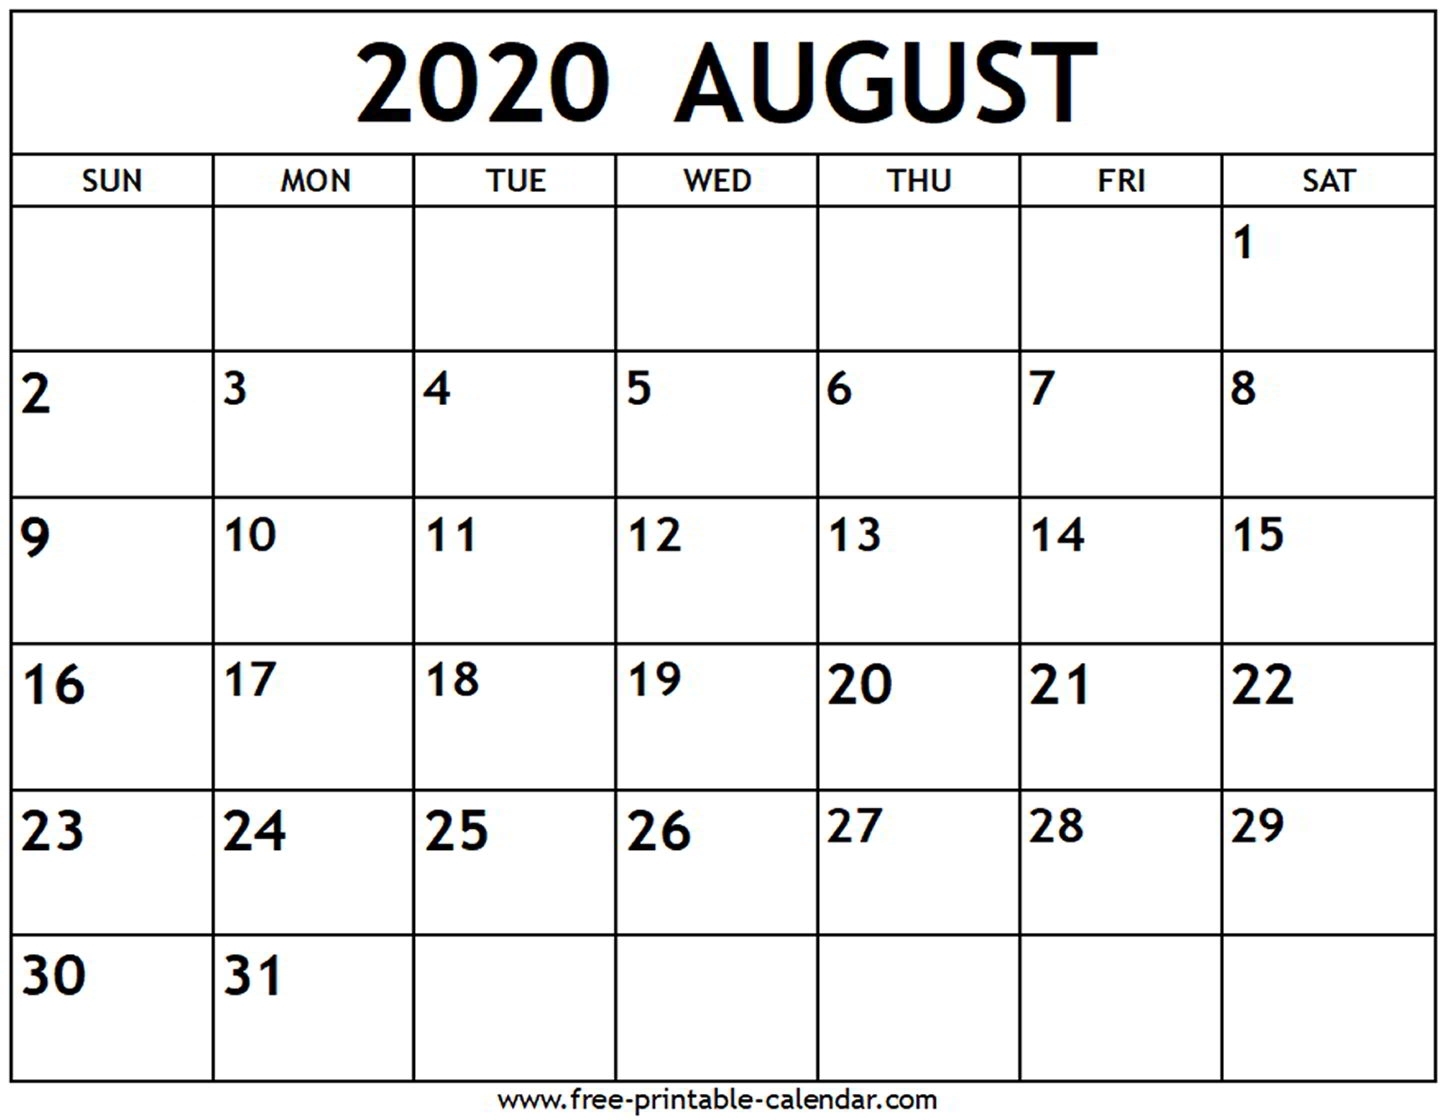 August 2020 Calendar - Free-Printable-Calendar regarding Printable Fill In 2020 Calndar